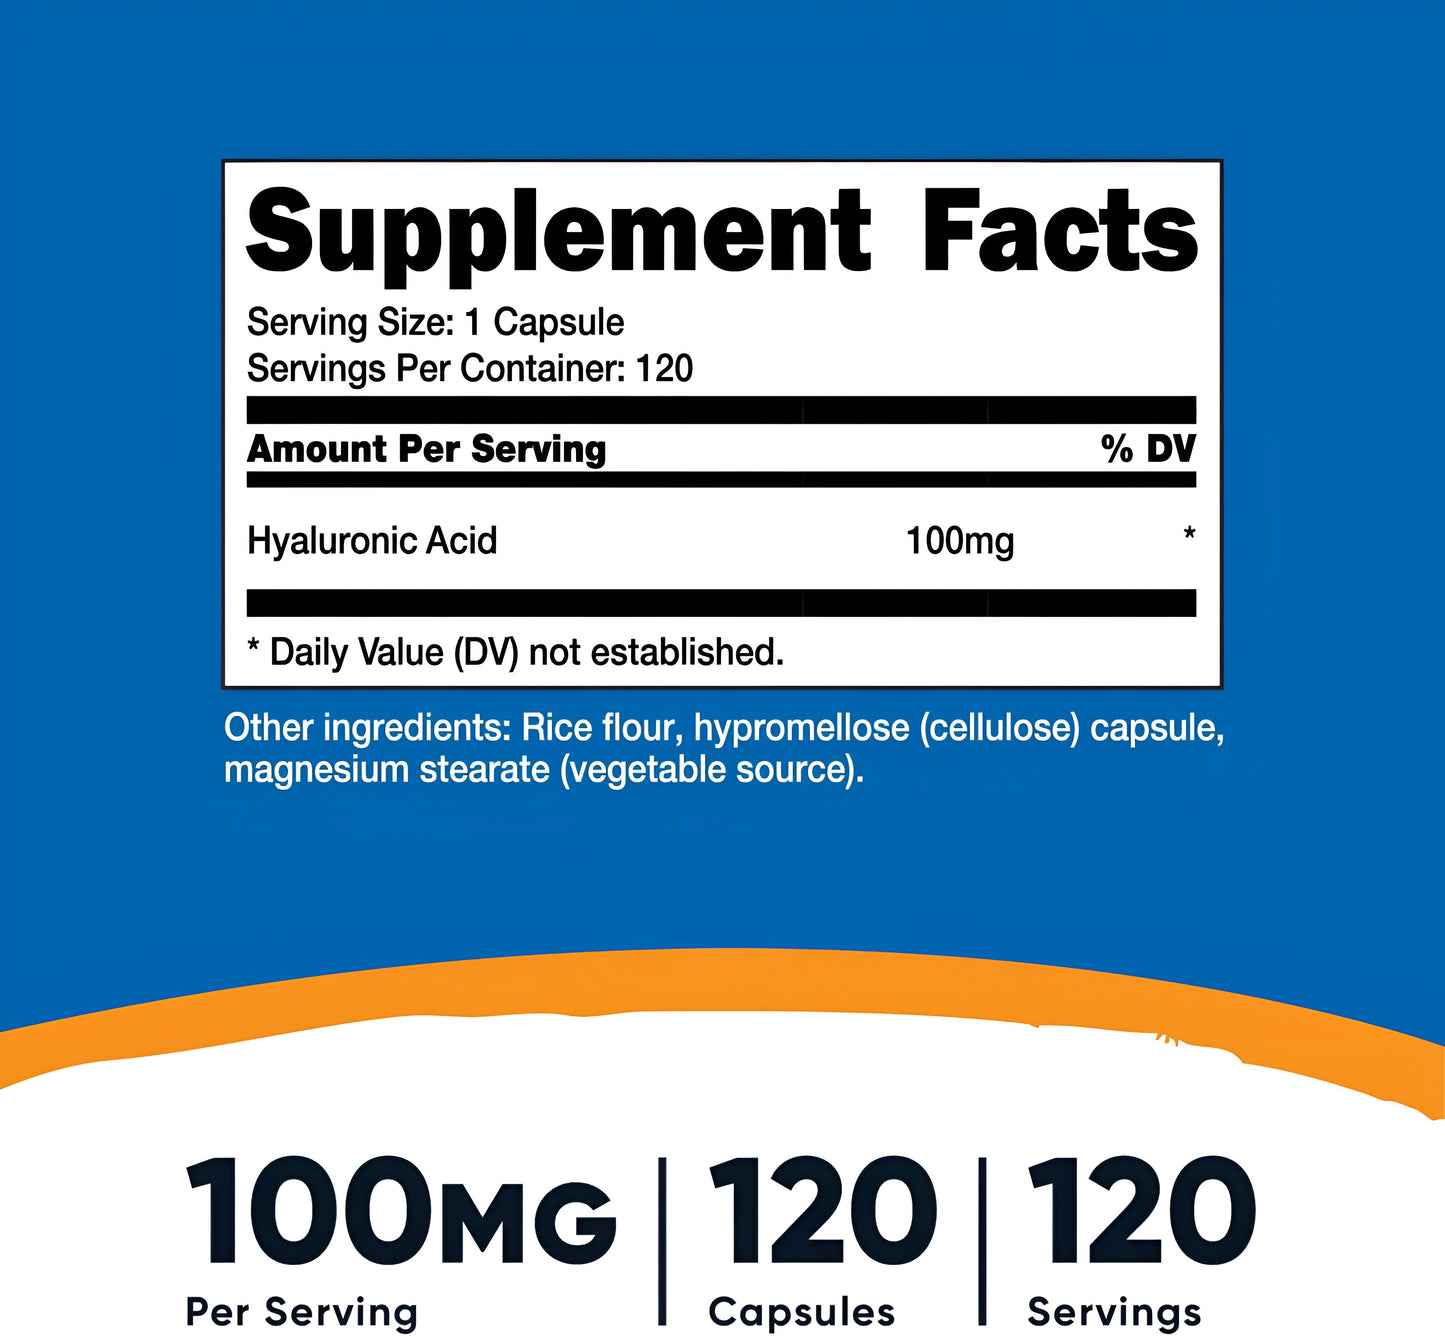 Nutricost Hyaluronic Acid Capsules 100mg,120 Vegetarian Capsules - Gluten Free, Non-GMO